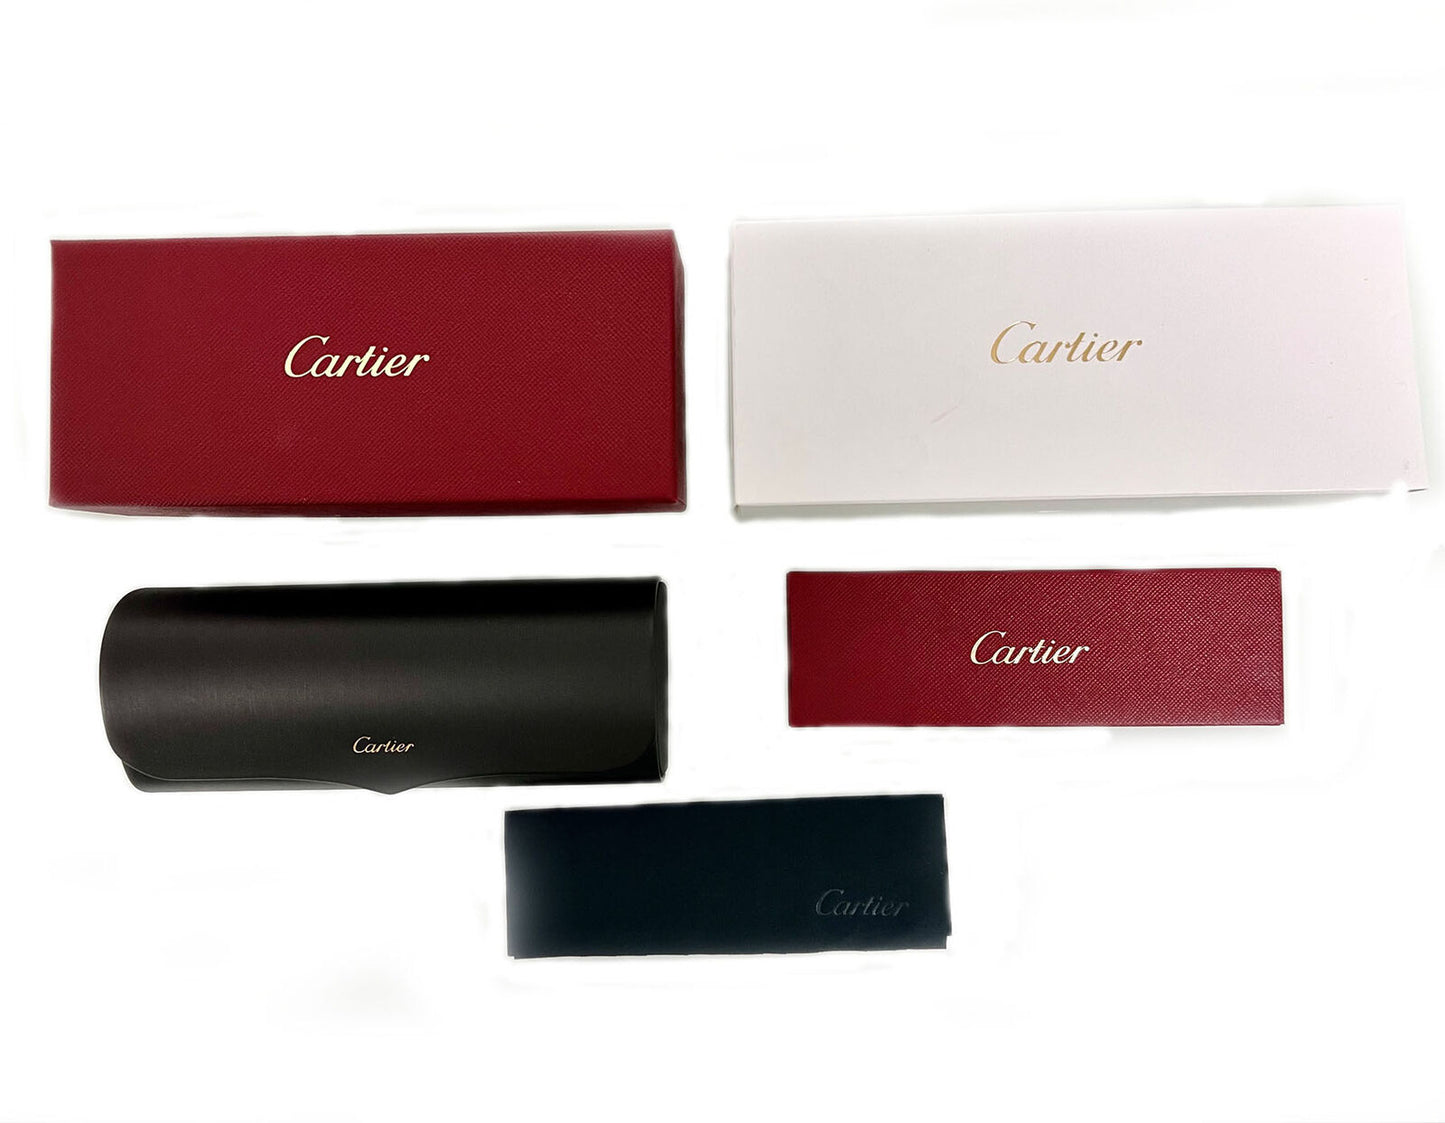 Cartier CT0357S-004 63mm New Sunglasses